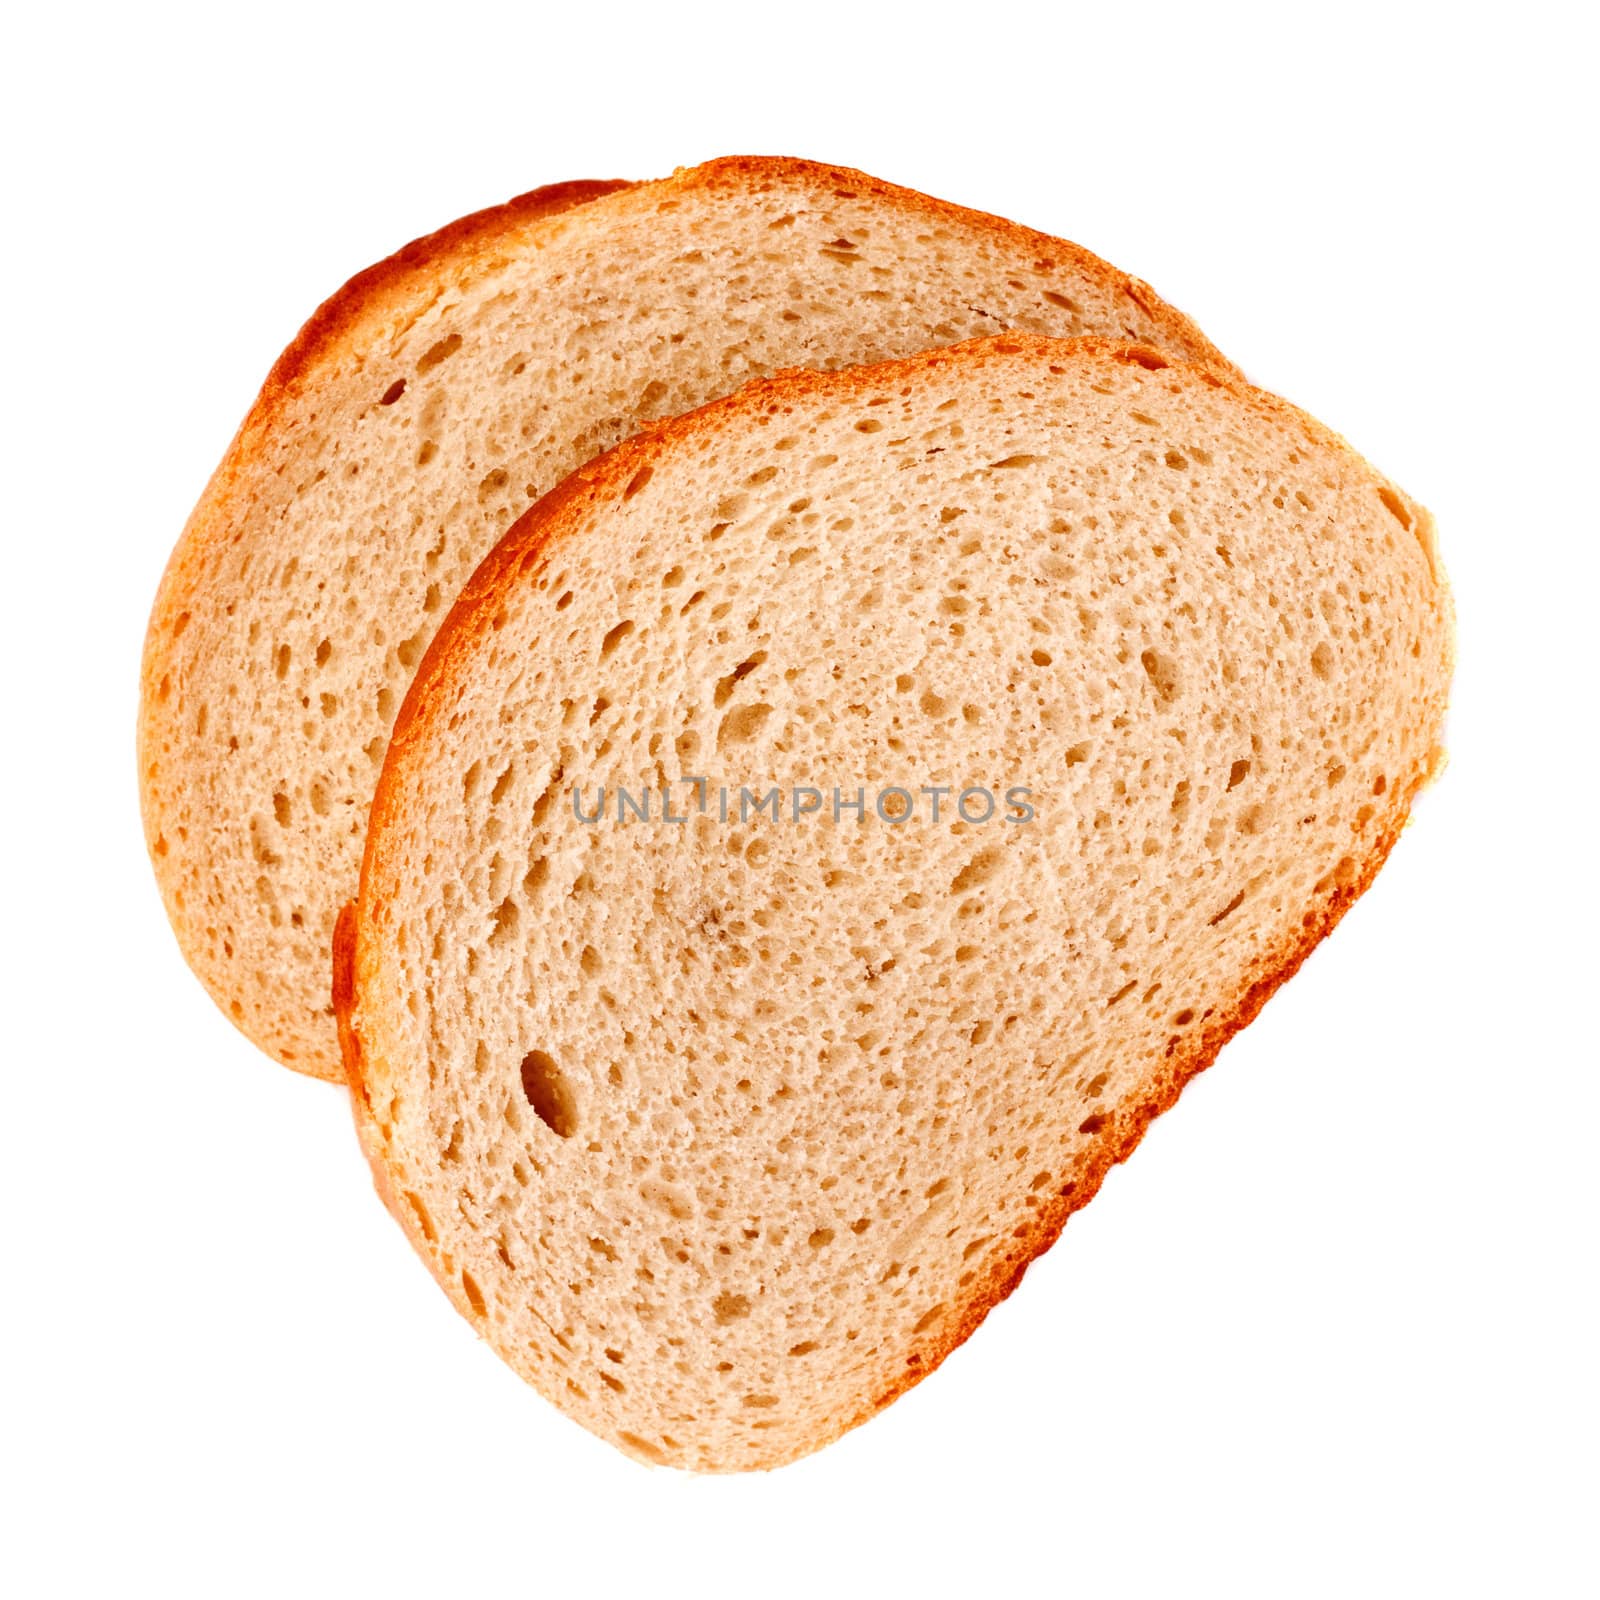 White Bread Slices by petr_malyshev